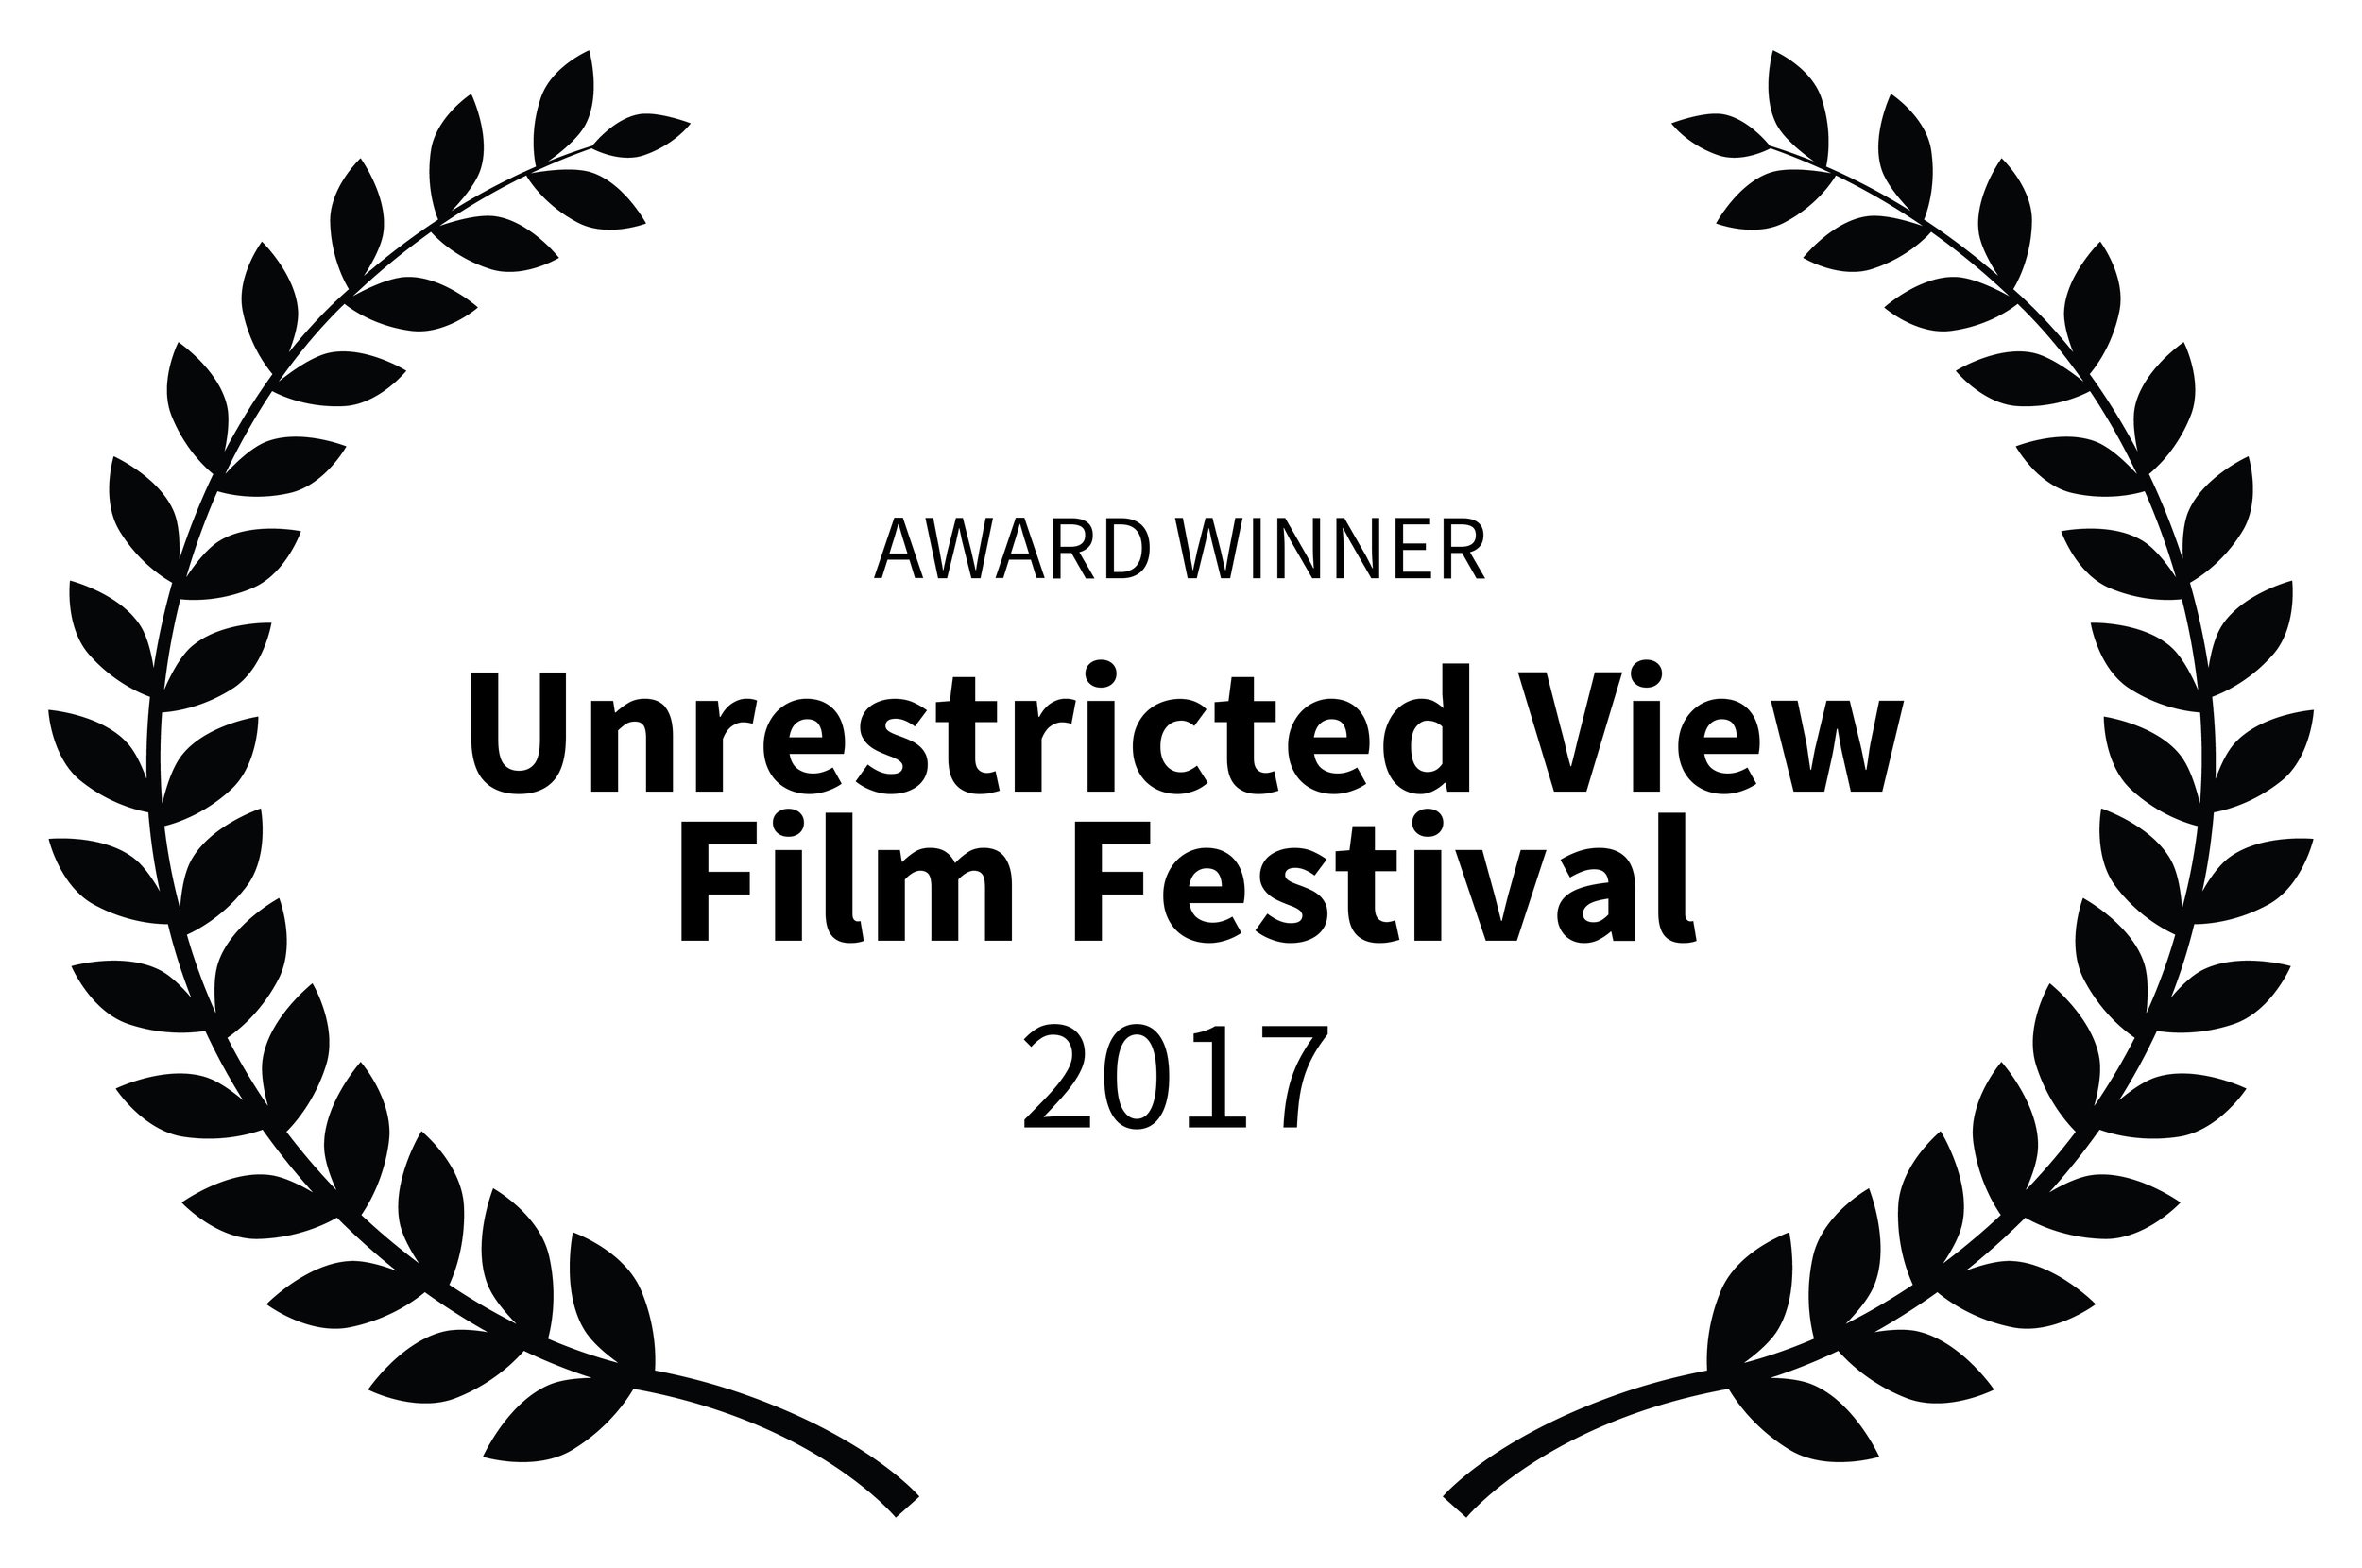 X_AWARDWINNER-UnrestrictedViewFilmFestival-2017.jpg